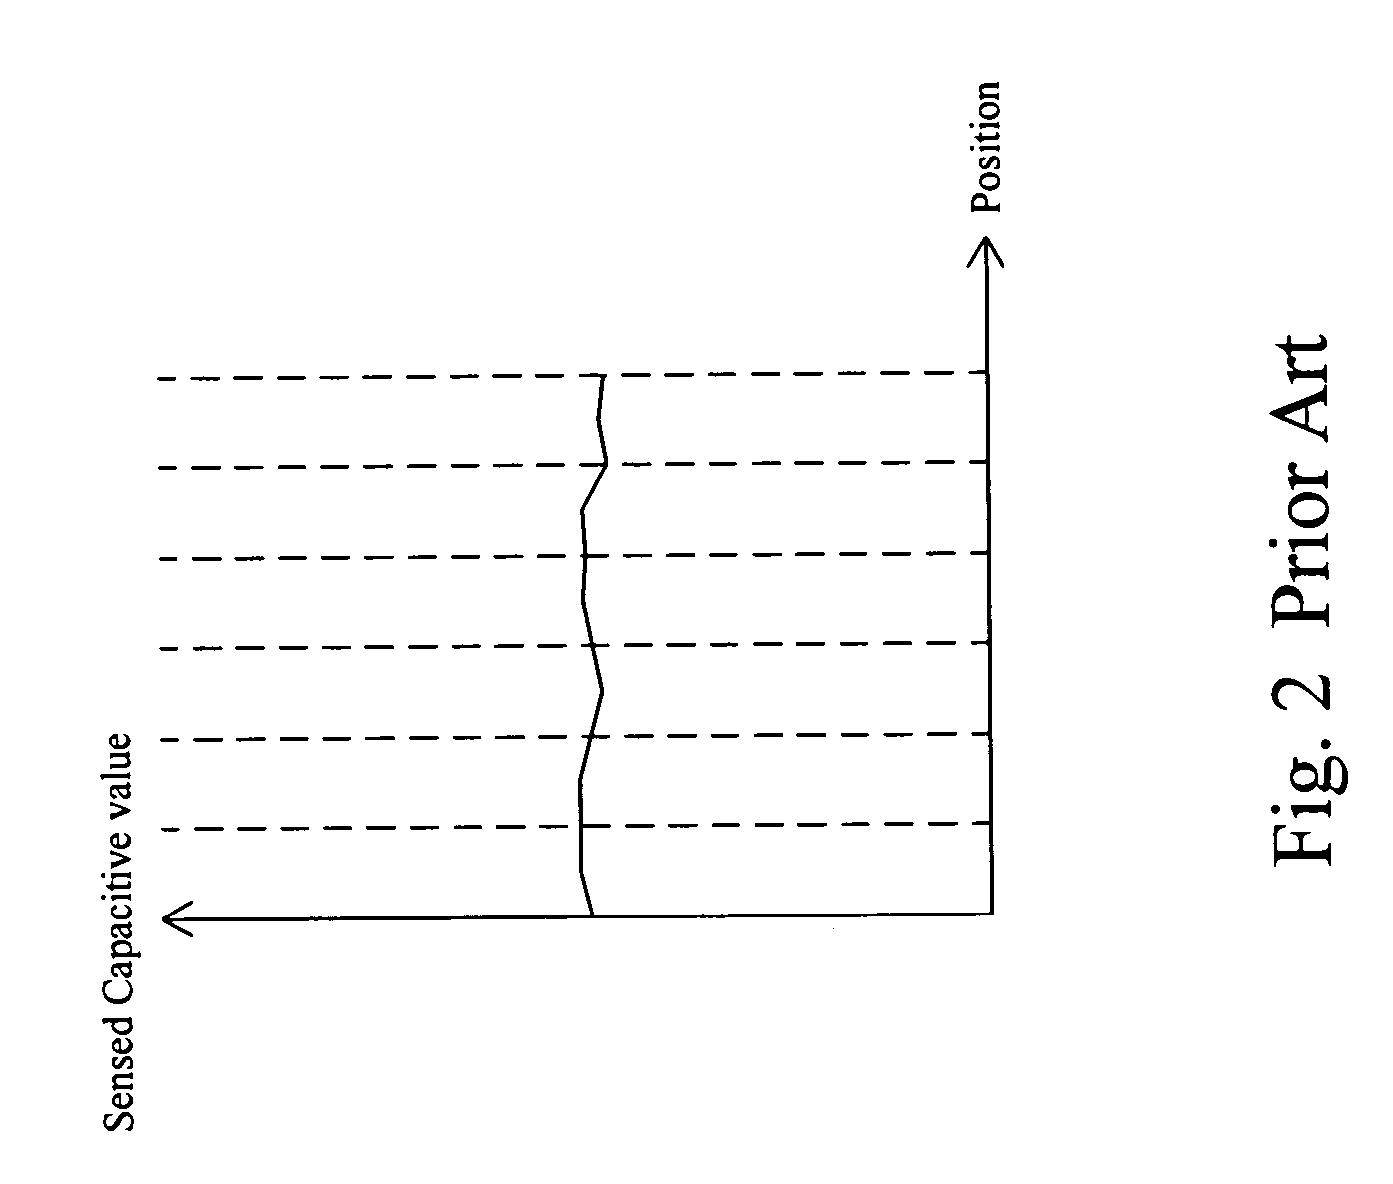 Base capacitance compensation for a touchpad sensor